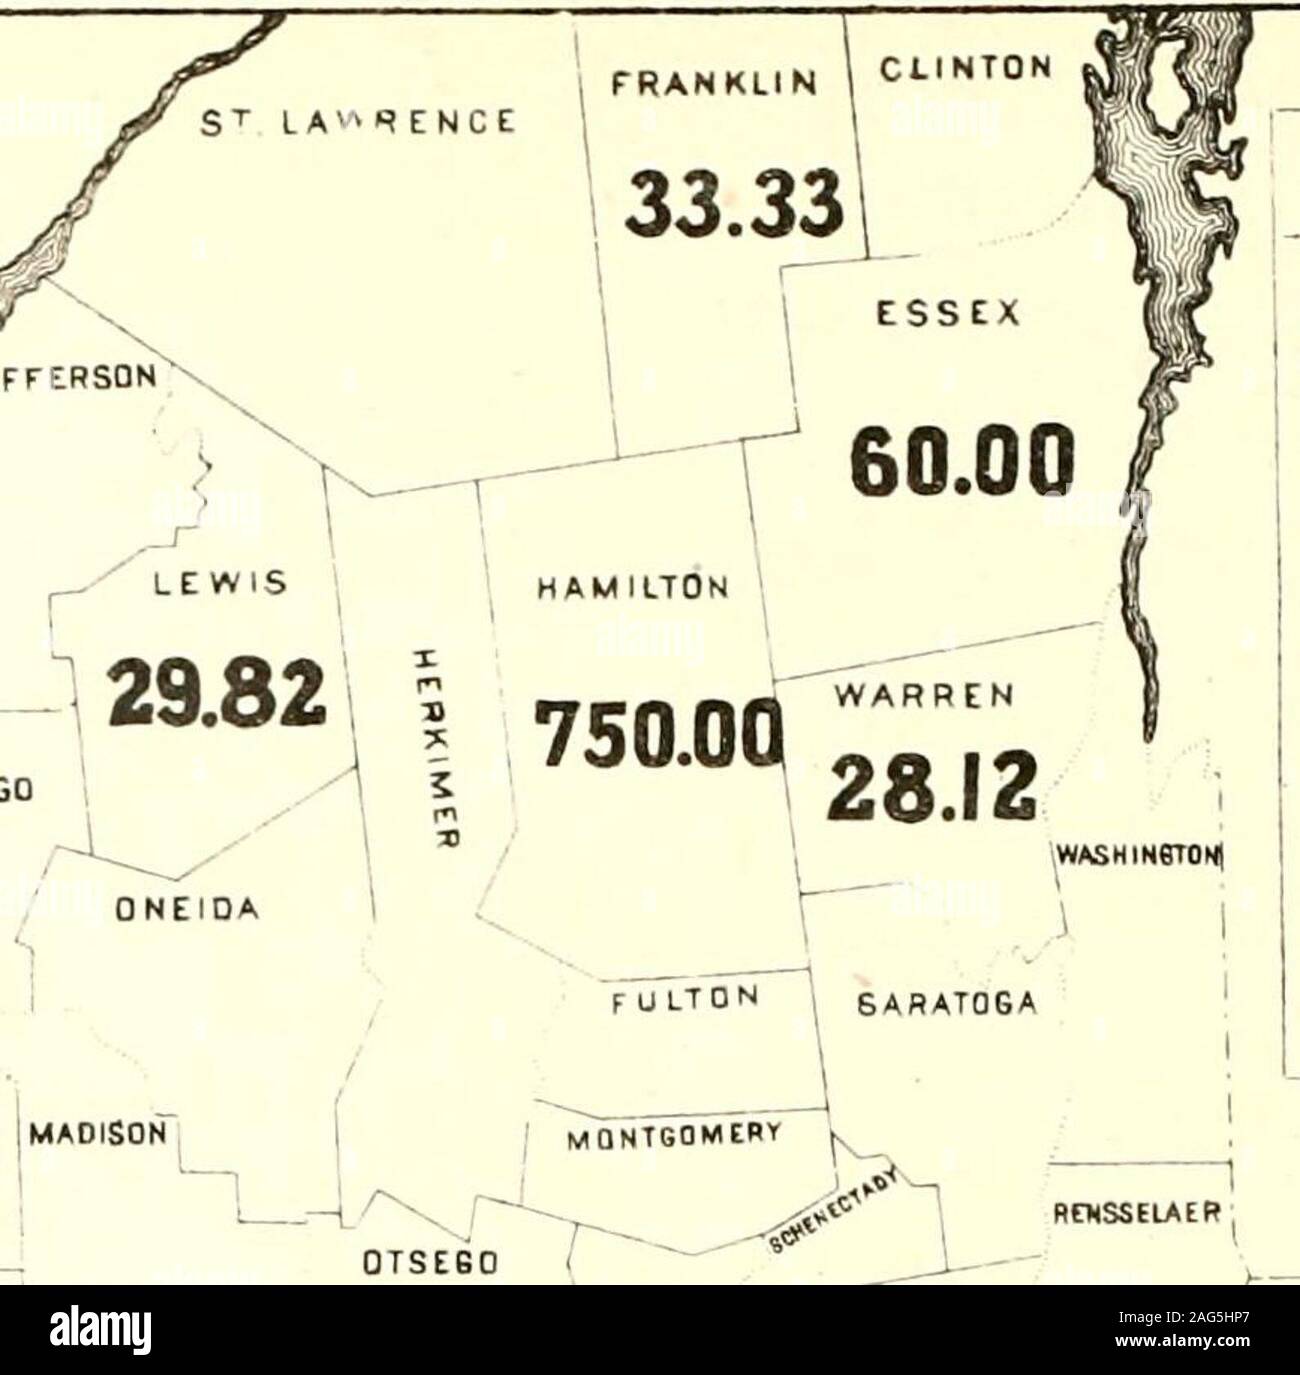 . Census of the state of New York for 1875. Map E. INCREASE OF COLORED POPULATION OF NEW YORK, 1870 to 1875 INCREASE OF COLORED POPULATION OF N E W YORK.1870 TO 1875. Mj^0fW^^$^^ ^JEFFERSON OSWEGO iJHLt Arts GCNESIC munRUE. 19.01 r^UVIHSSTOM I O 1 ONONOAOA m .-^. TV CORTLANOt. Counties. 1 Per Ct ! Hamilton, 1 750.00 1 Cortland, 2 77.59 i Essex, 3 60.00 1 Steuben, 4 45.00 Putnam, s 40.00 : Orleans, 6 38.95 Franklin, 7 33,33 Lewfs, 8 29.82 Warren, 9 28.12 1 Kings, 10 23 42 , Schoharie, 11 23.12 ! Livingston, 12 20.47 Monroe, 13 19.01 Onondaga, 14 16.81 : Broome, * li.18 CATTARAUGJS ALLE8AHY iXHA Stock Photo